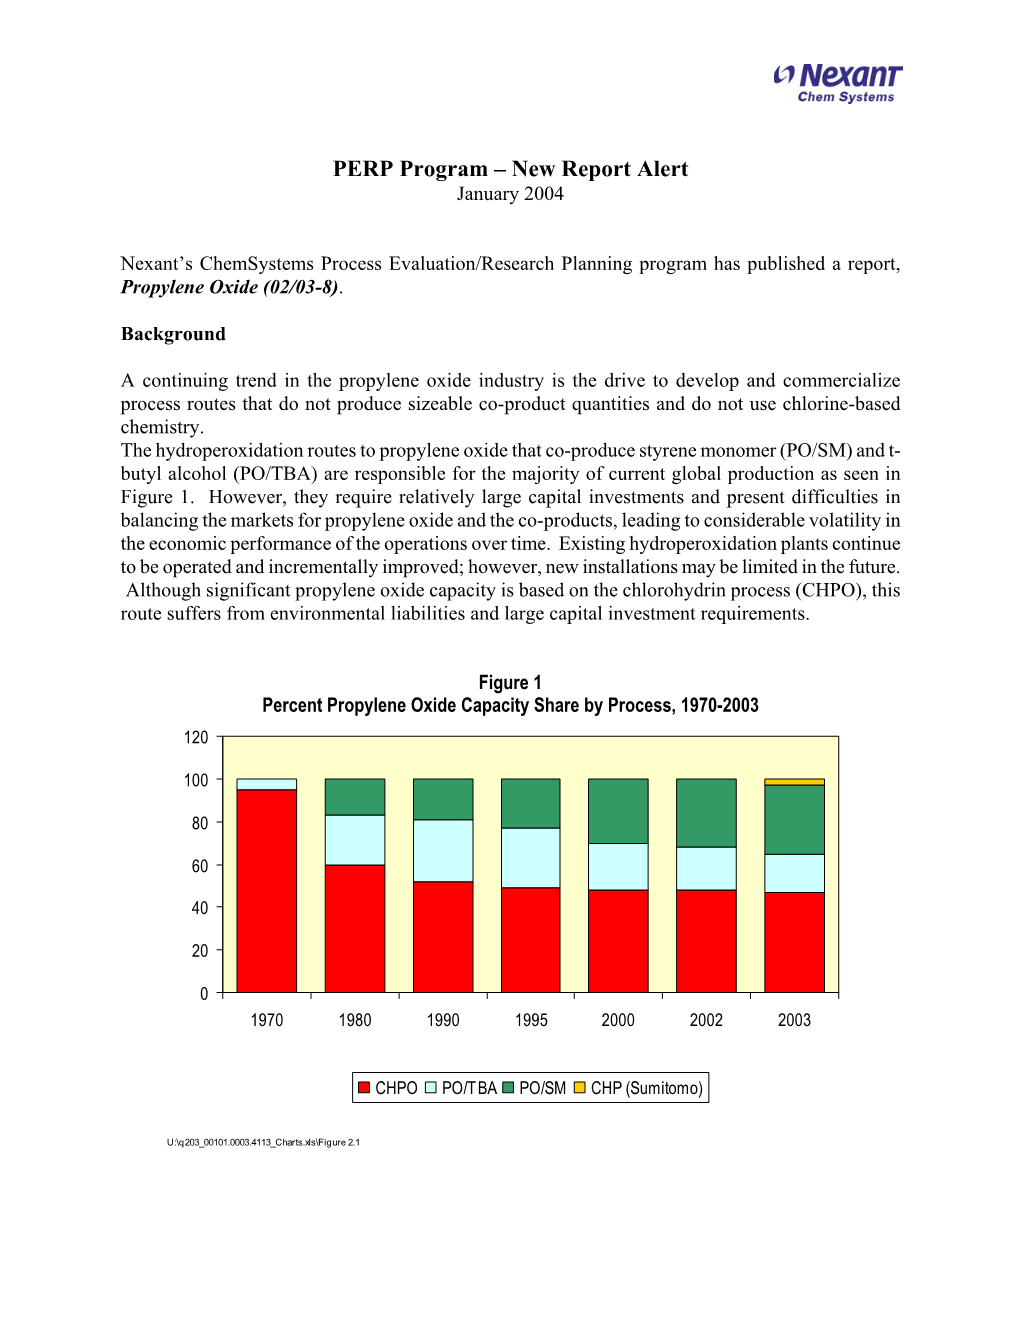 PERP Program – New Report Alert January 2004